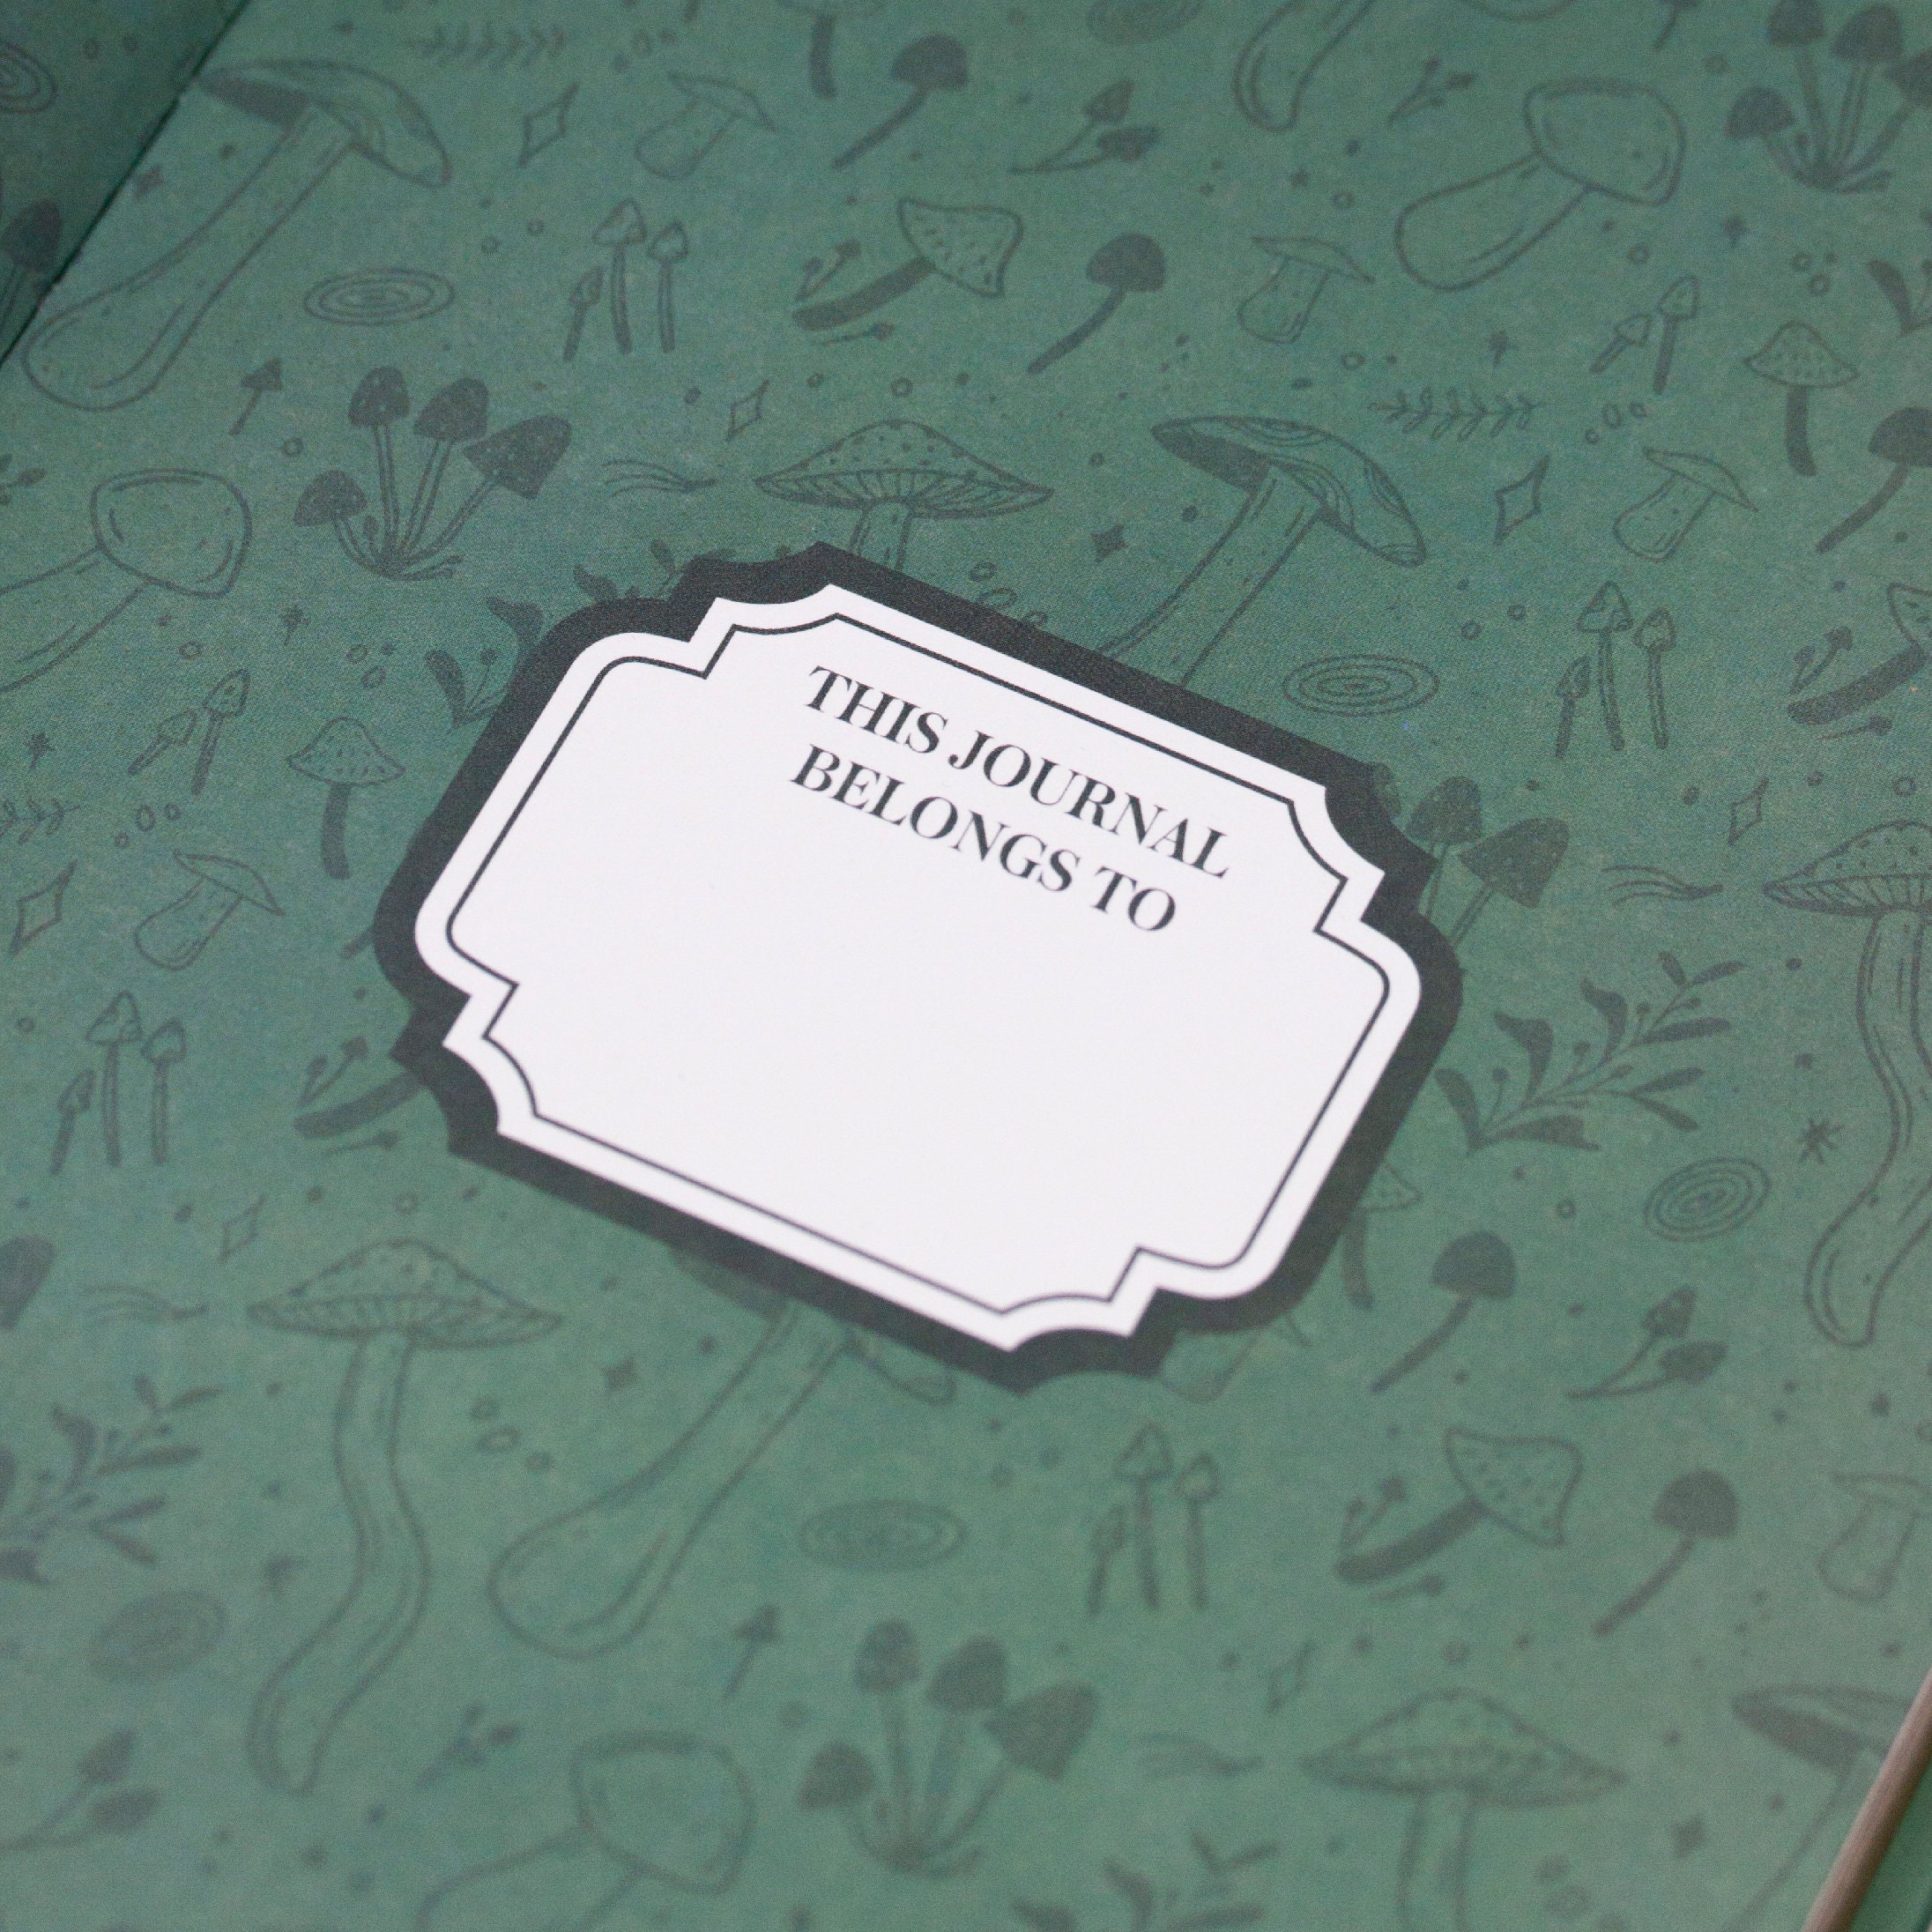 Cute Ghost GOLD FOIL journaling sticker sheet - translucent stickers -  Ghostie Garden Collection